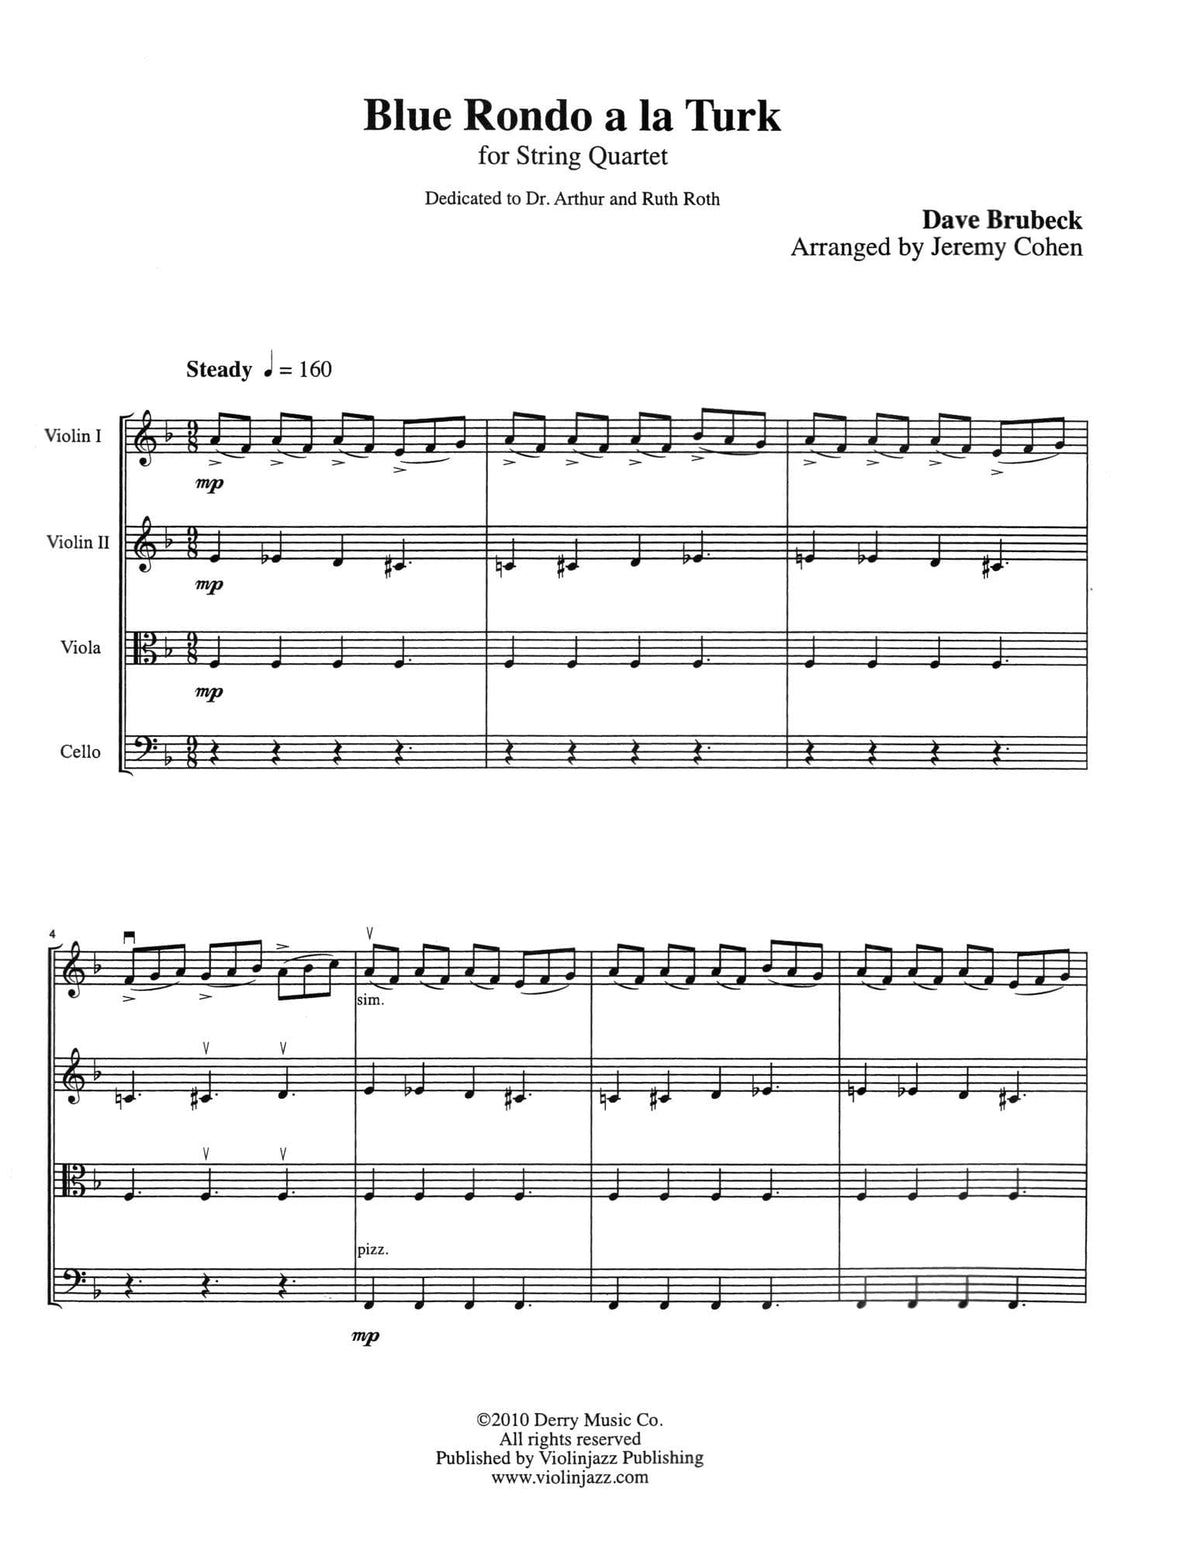 Brubeck, Dave - Blue Rondo a la Turk and Strange Meadowlark - Dave Brubeck Collection - for String Quartet - arranged by Jeremy Cohen - Violinjazz Editions